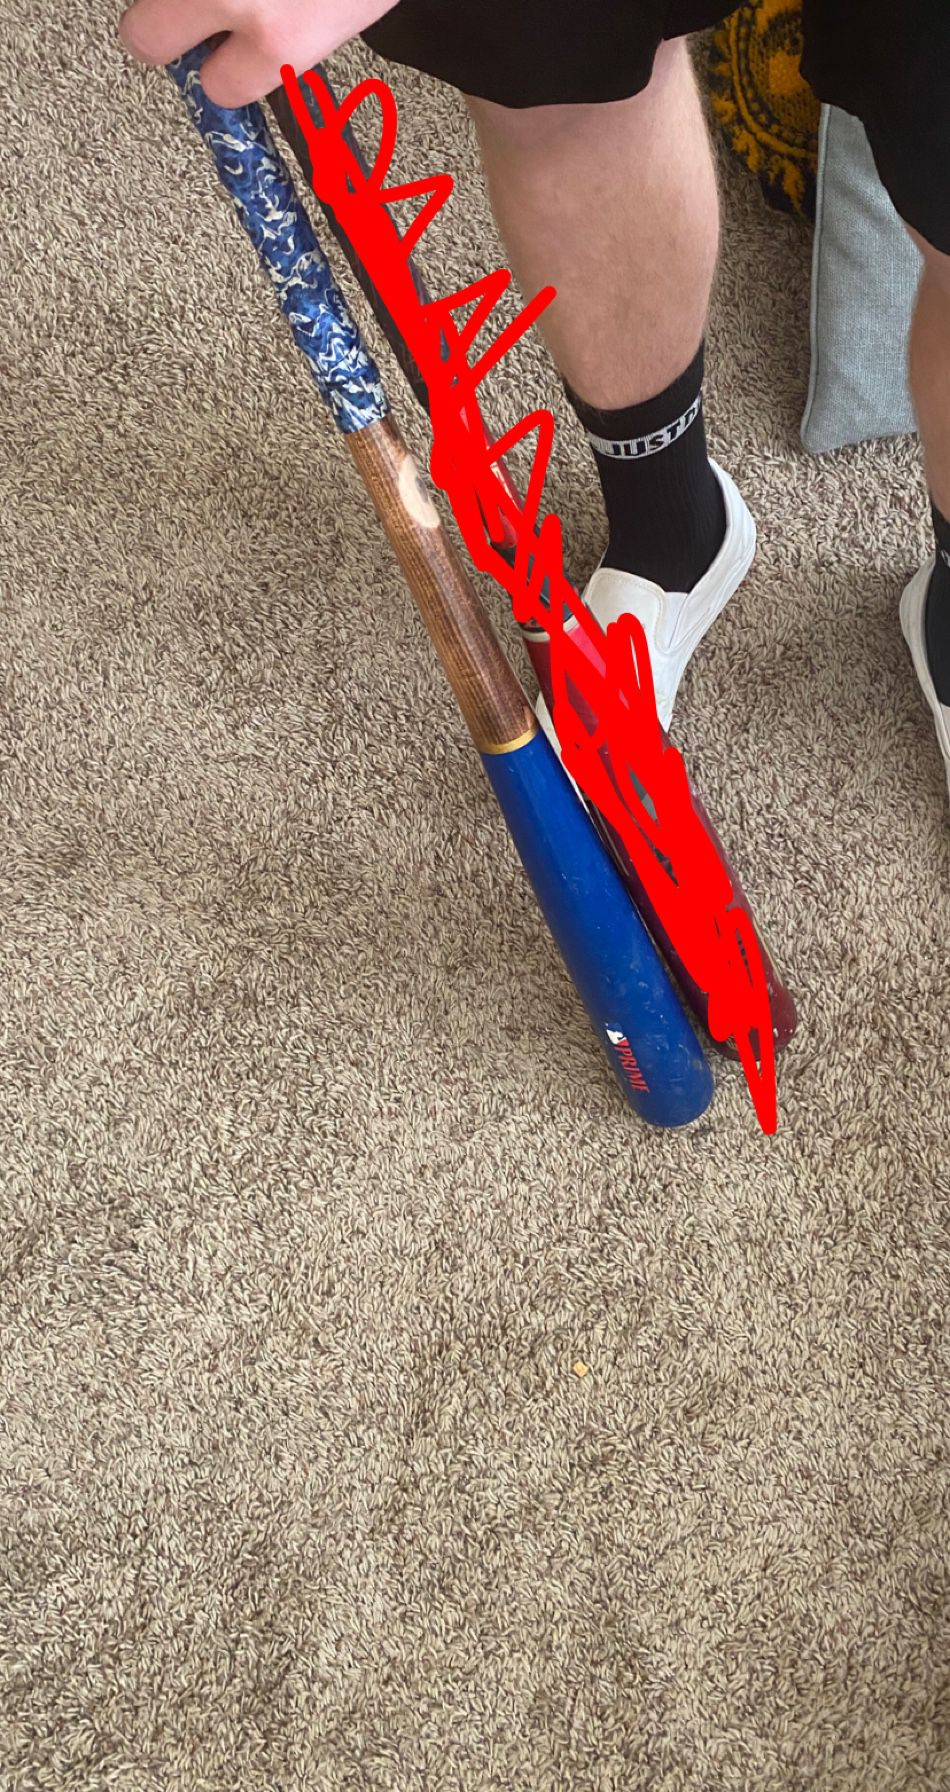 High school baseball bat